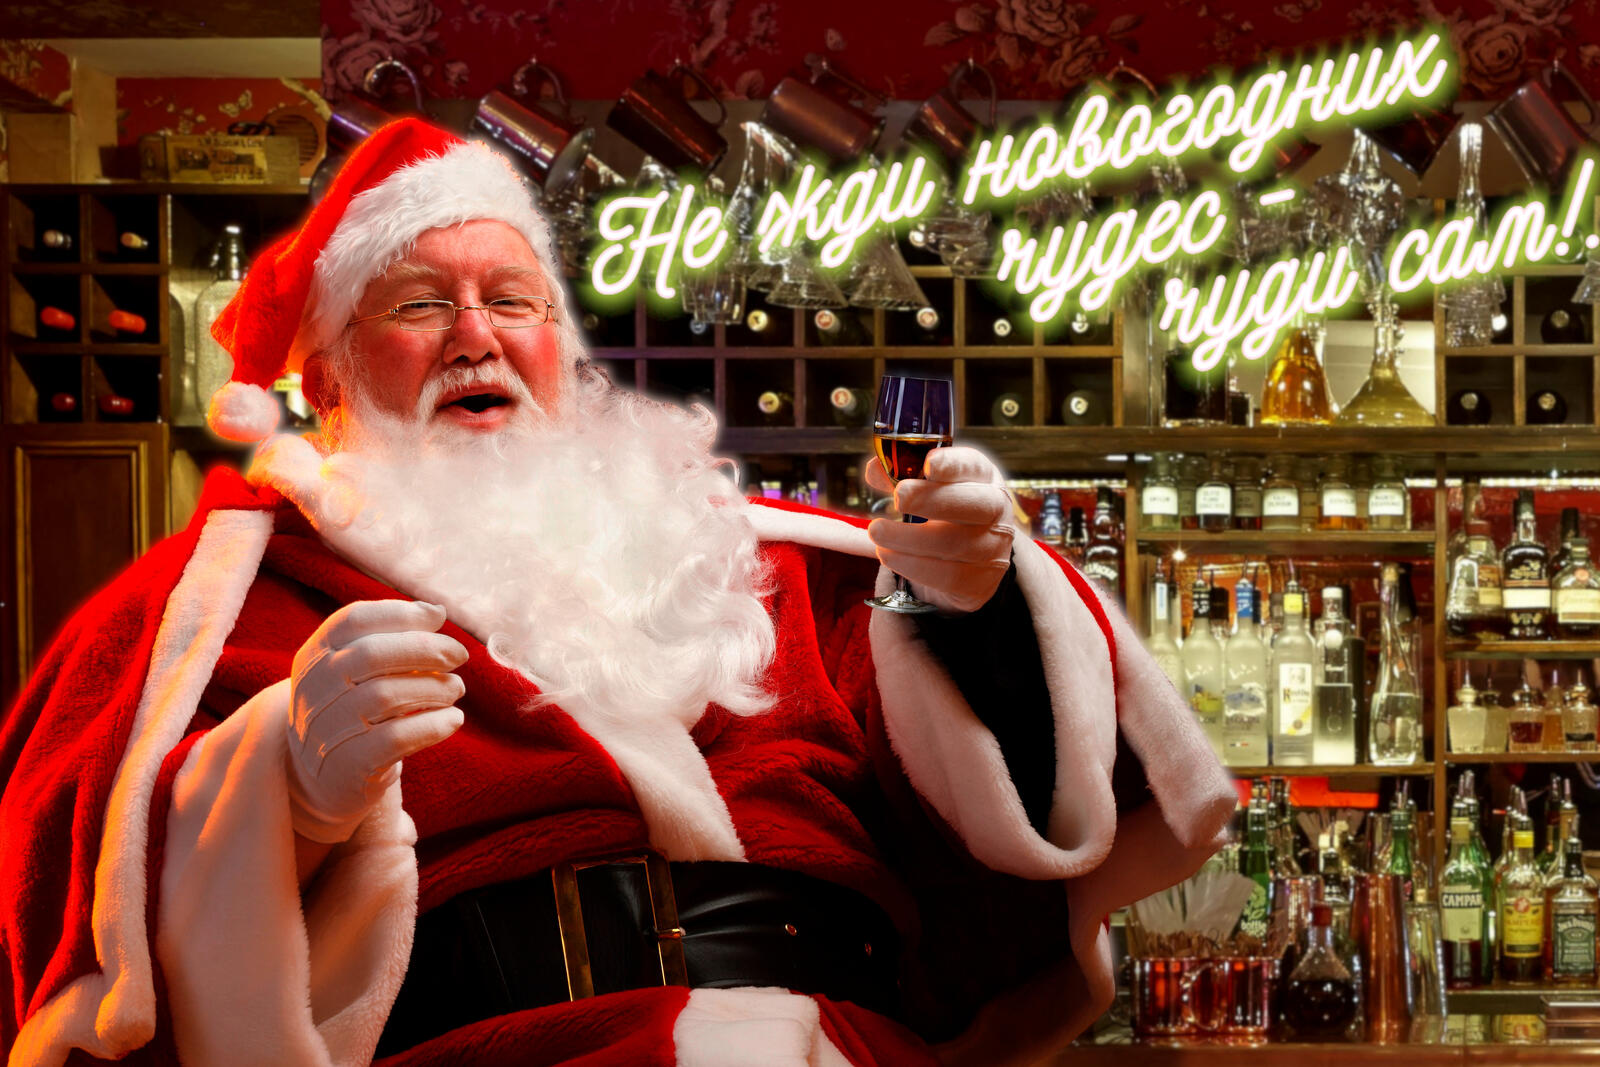 Бесплатное фото Санта клаус с бокалом виски